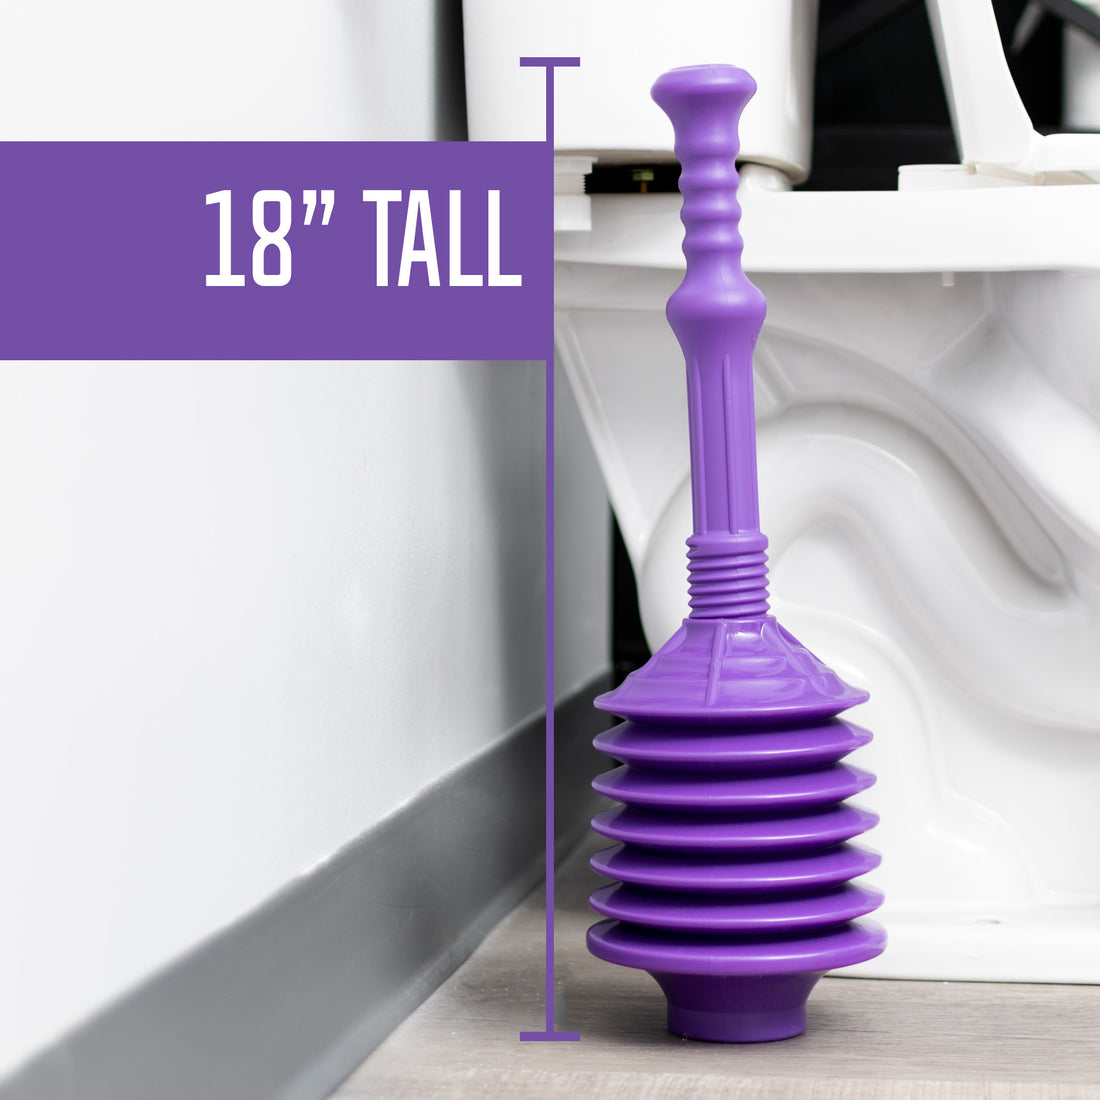 Bellows Accordion Toilet Plunger (Purple) - Utility sinks vanites Tehila